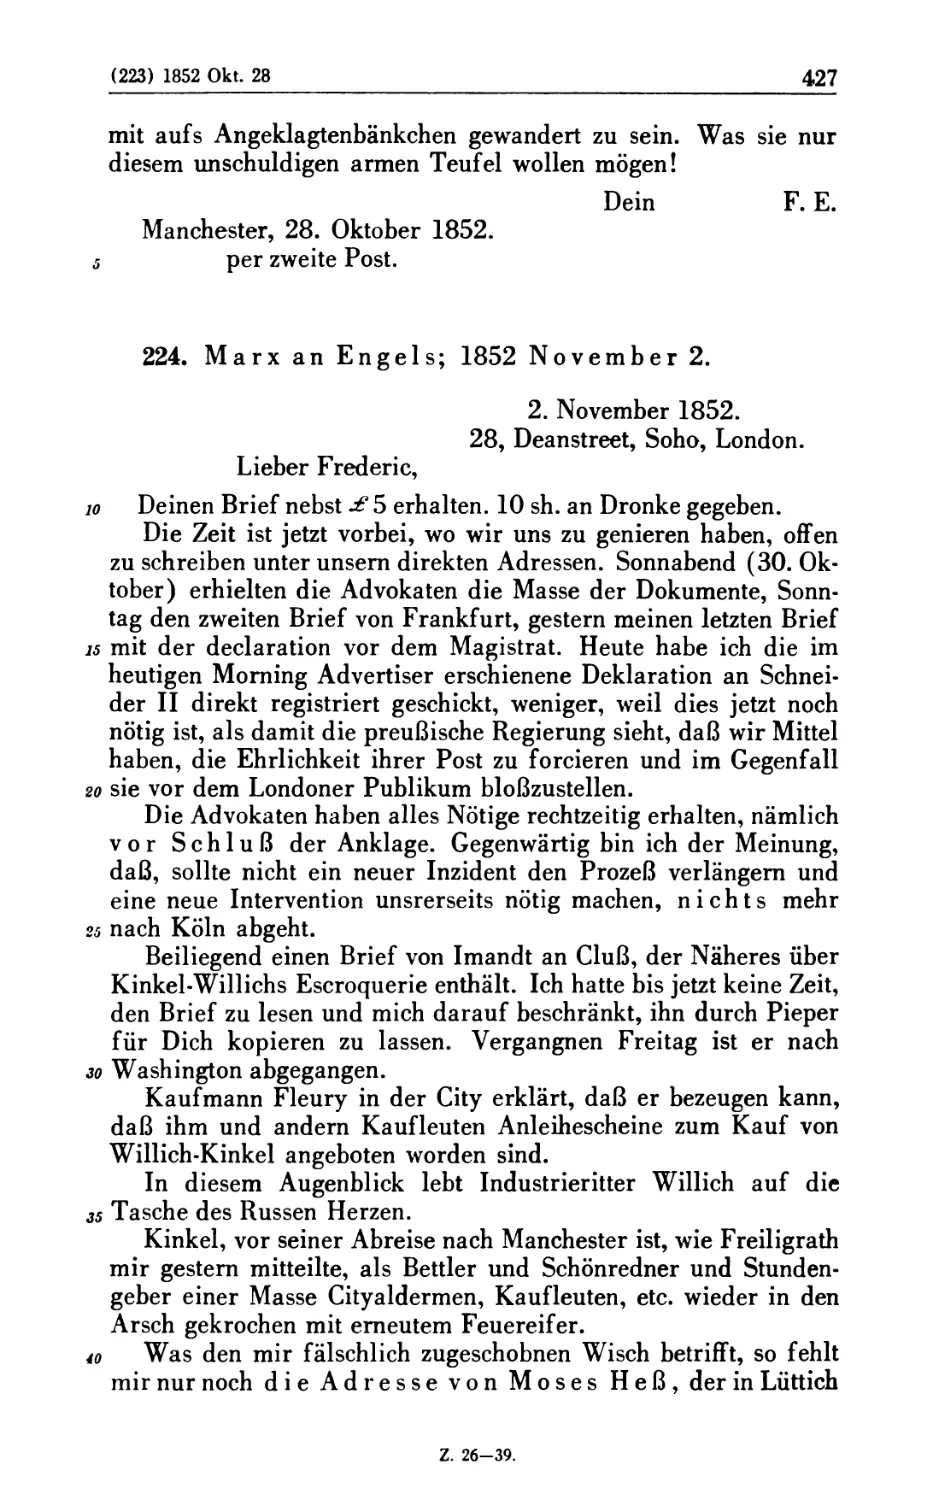 224. Marx an Engels; 1852 November 2